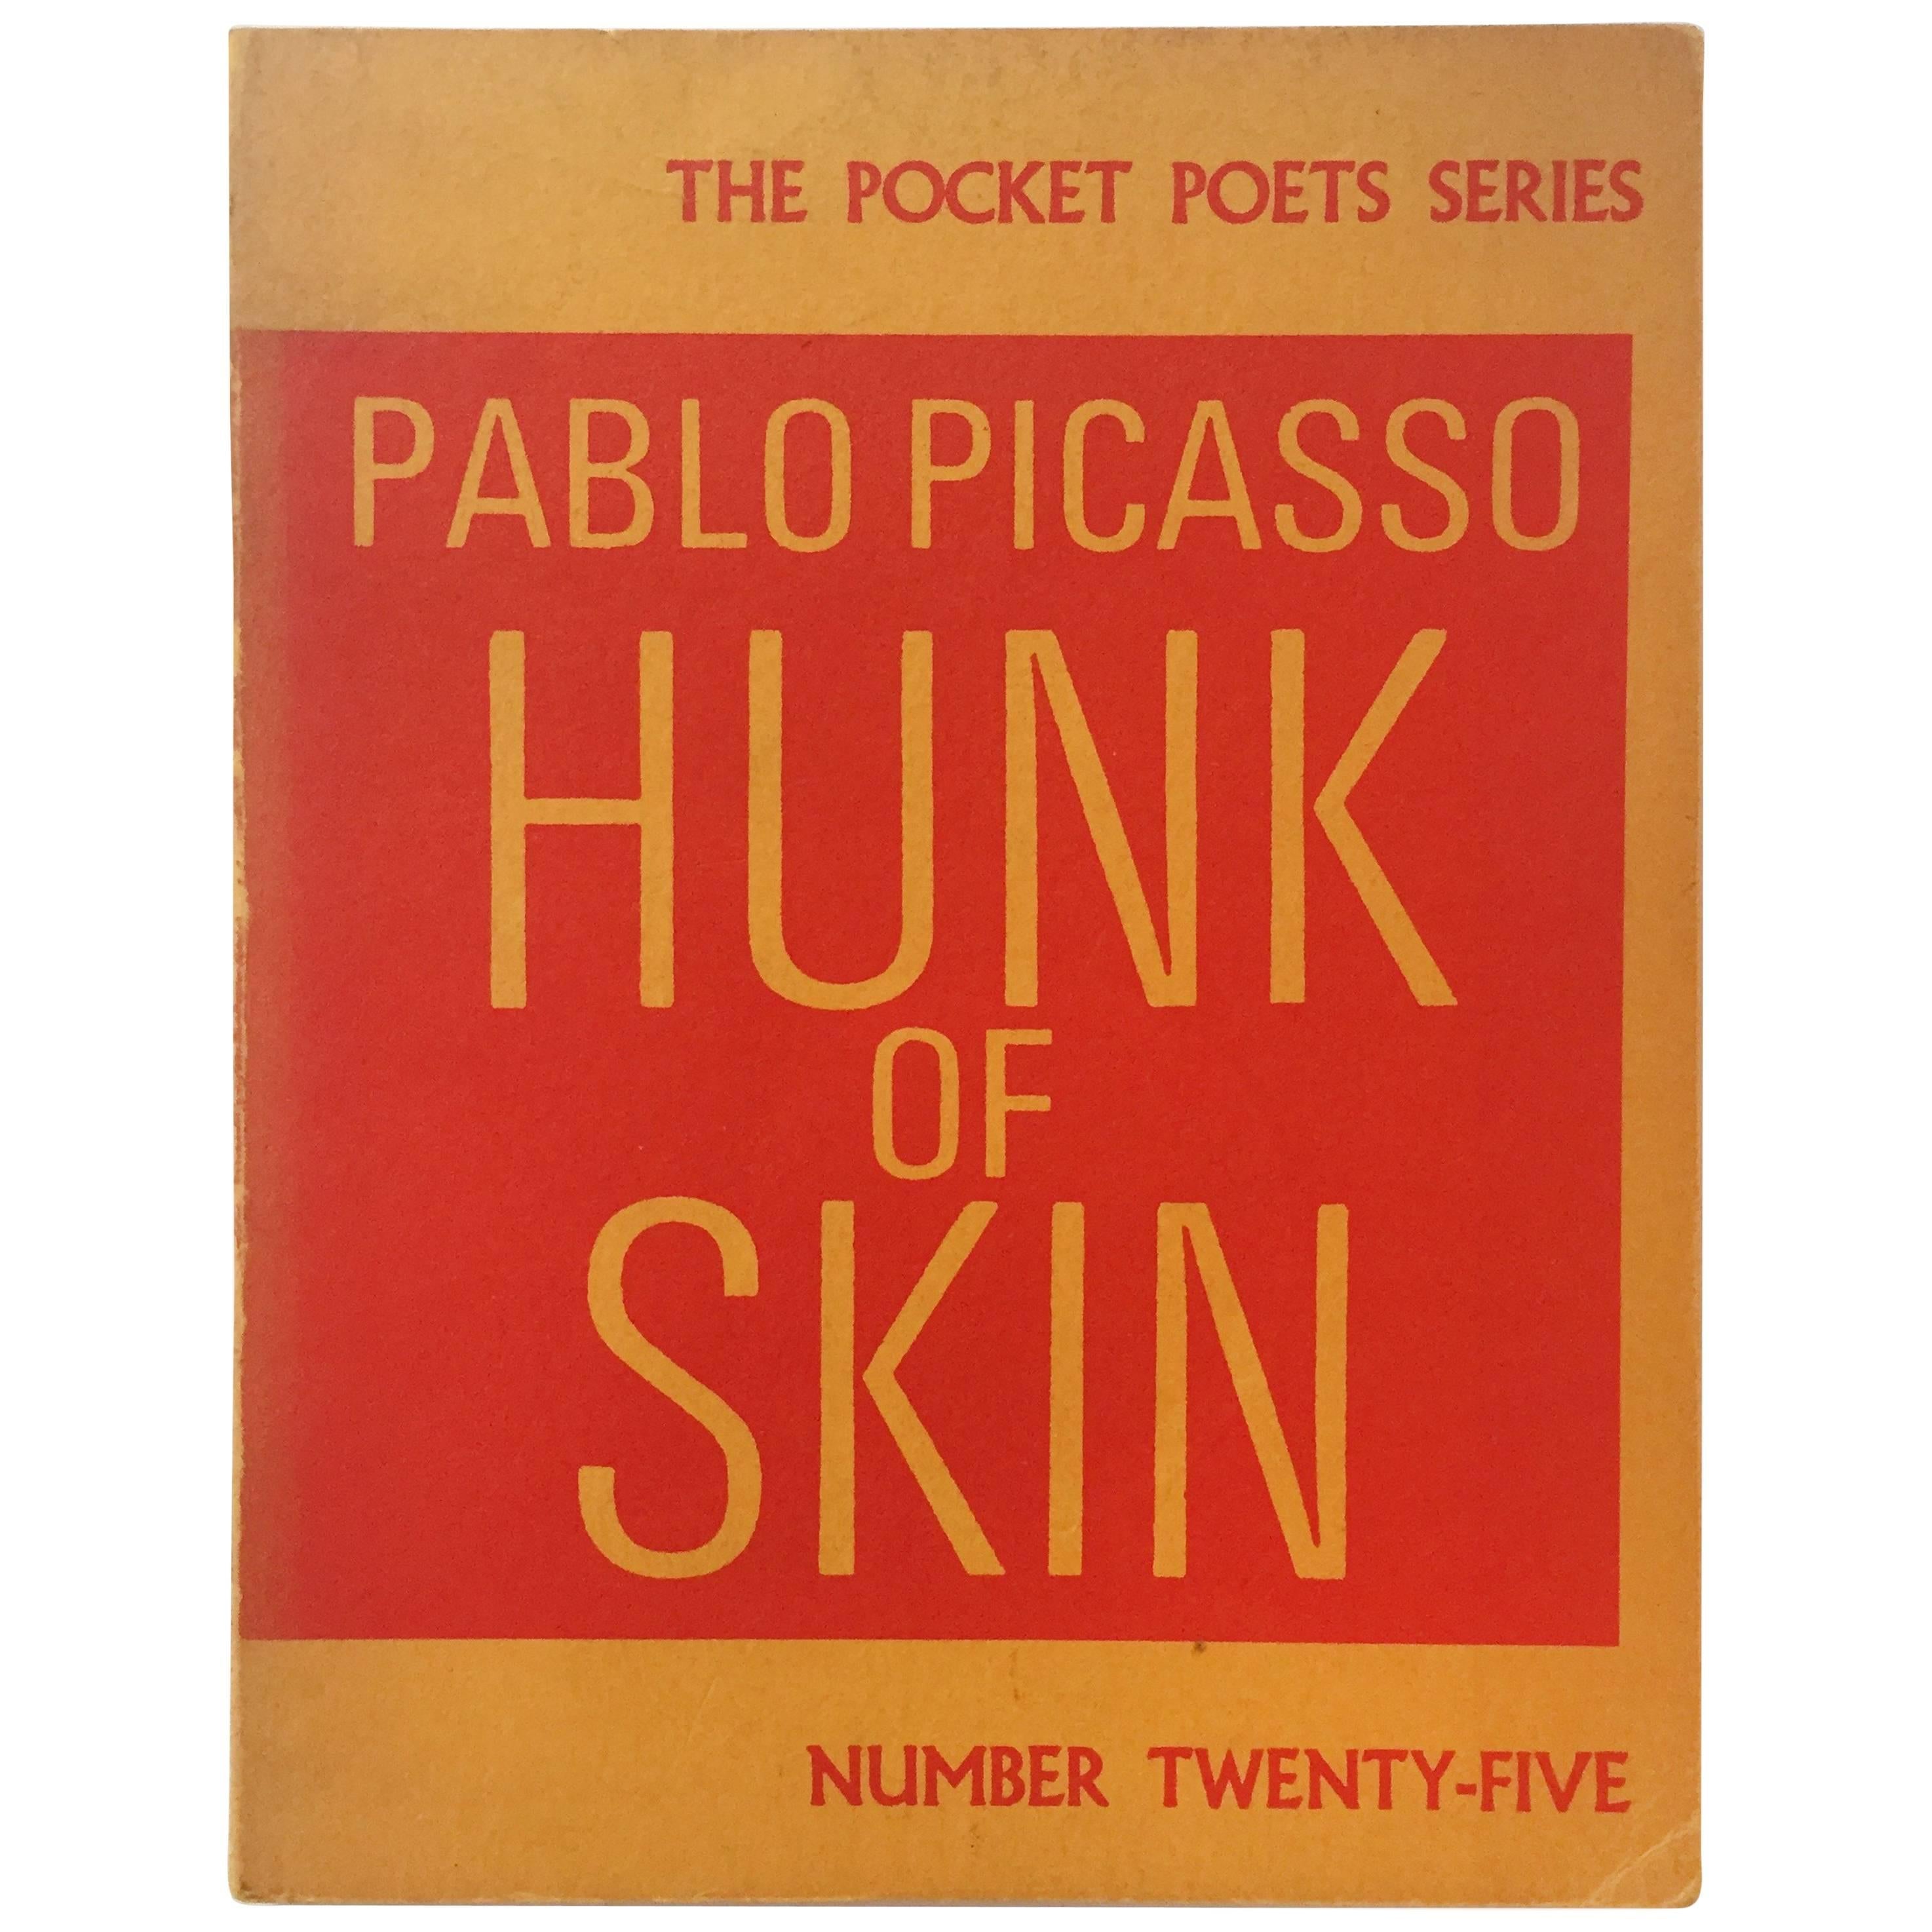 Pablo Picasso, “Hunk of Skin” Book, 1968